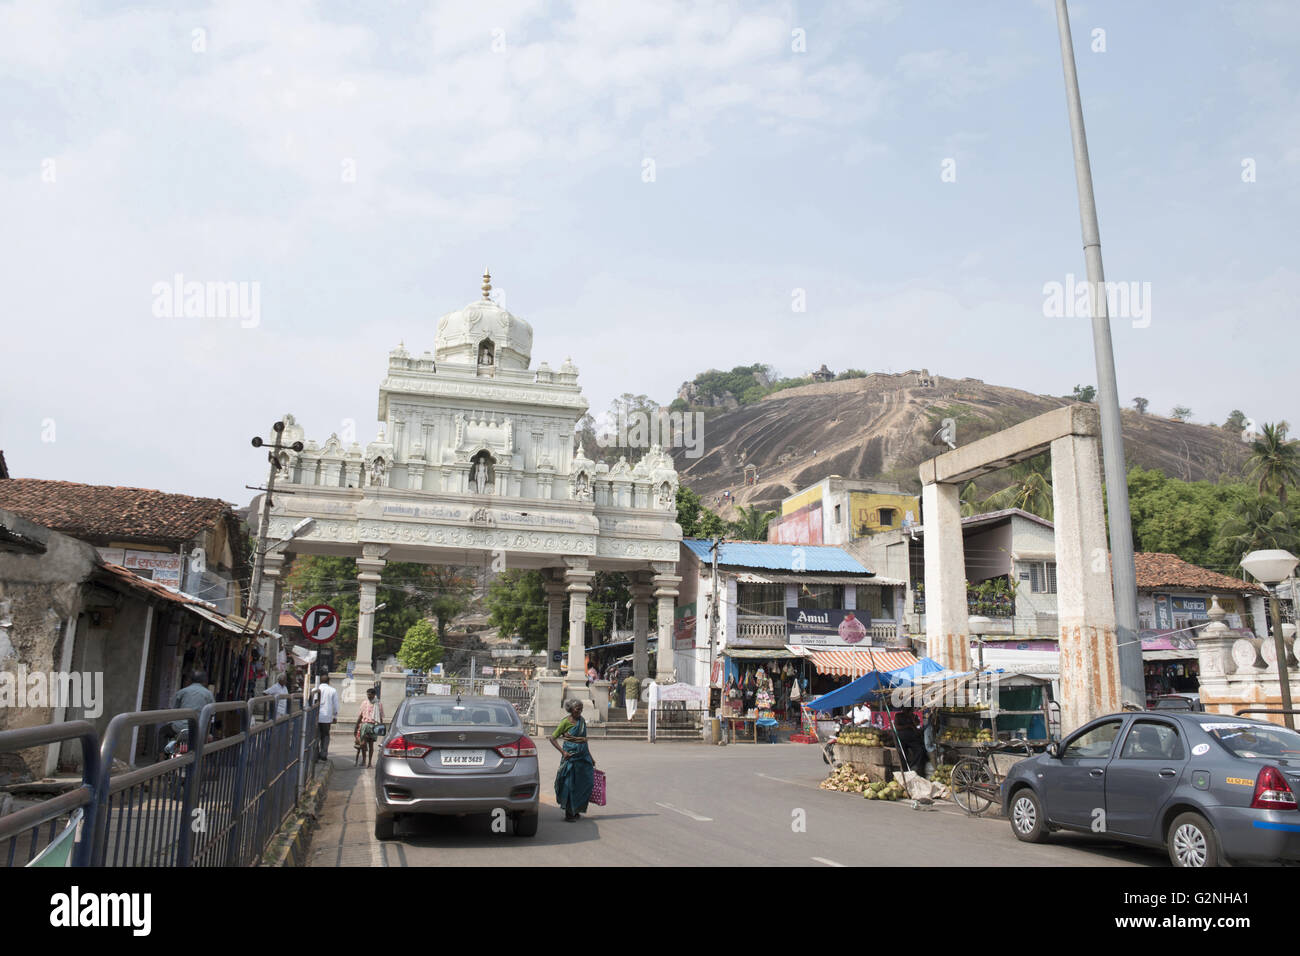 Eingerichtete erste Tor zur gomateshwara Tempel, vindhyagiri Hill, shravanbelgola, Karnataka, Indien. Stockfoto